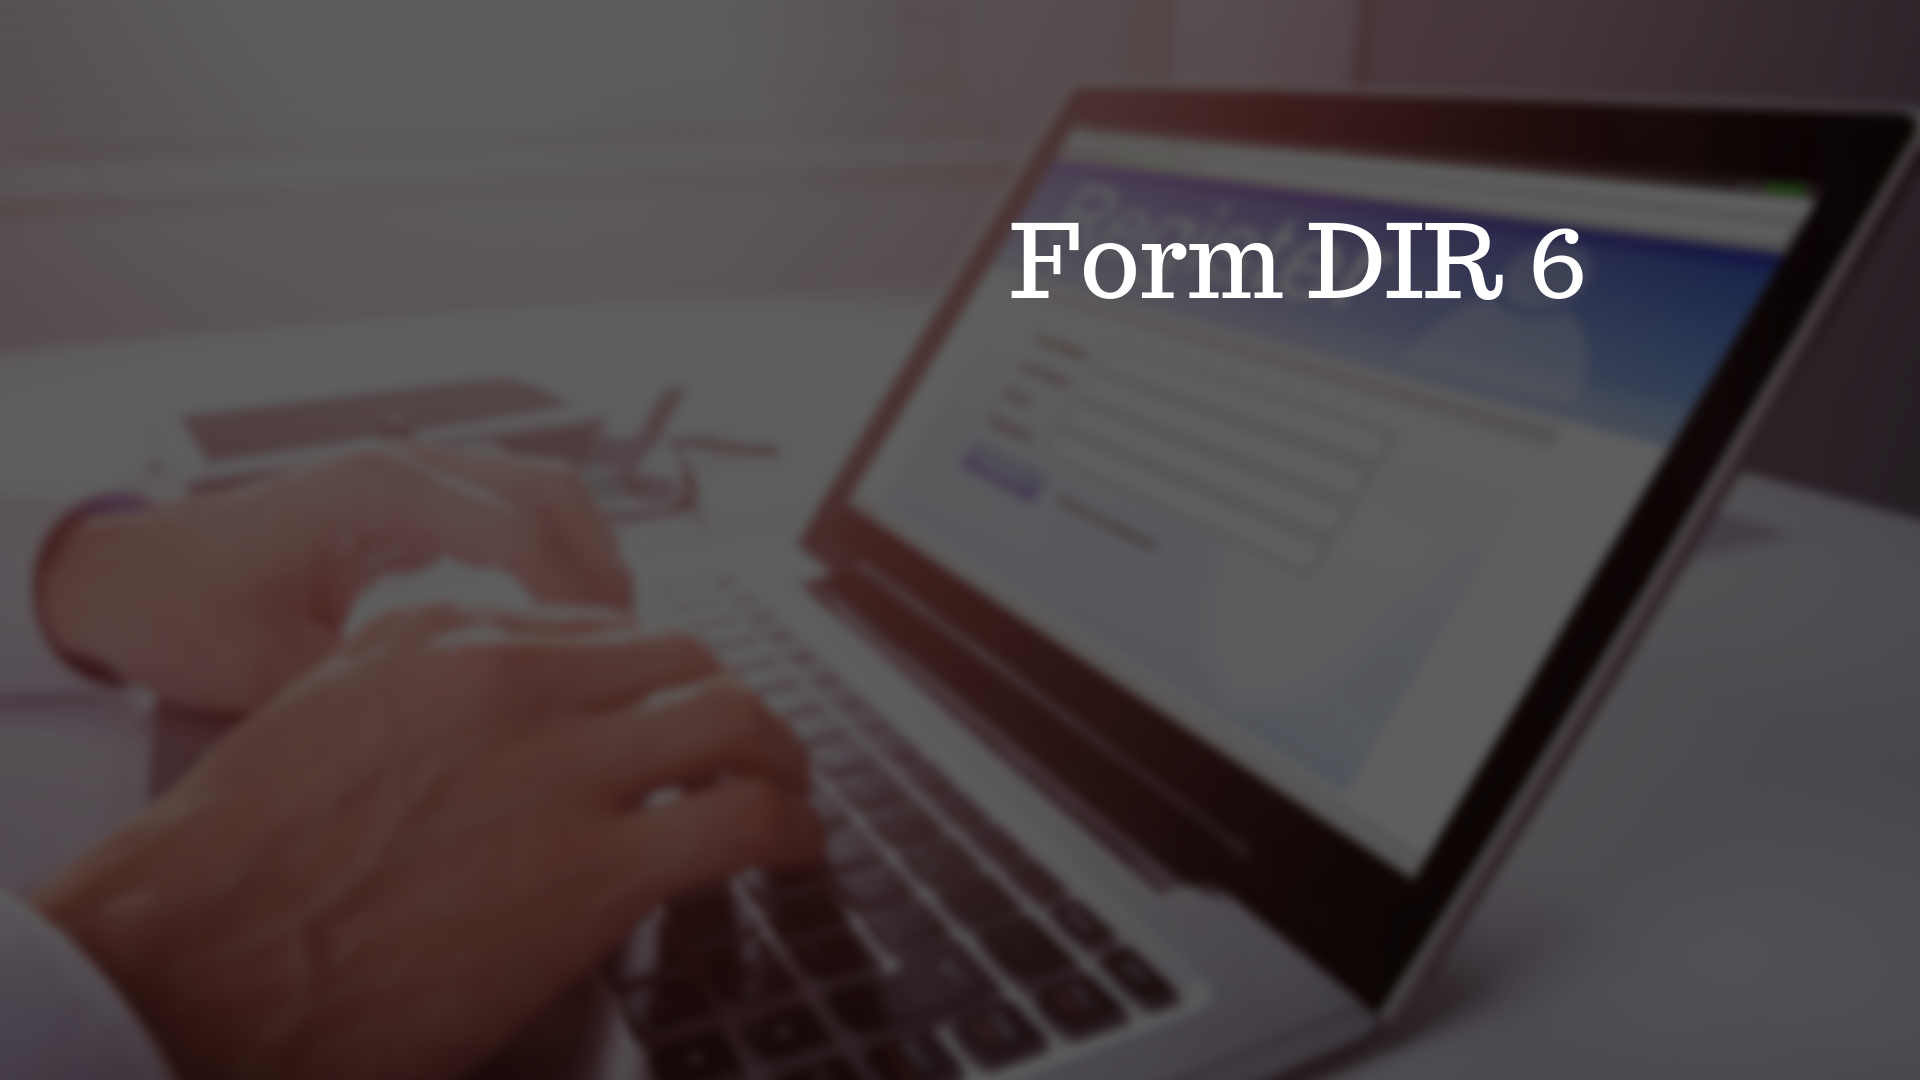 Process of filing Form DIR 6